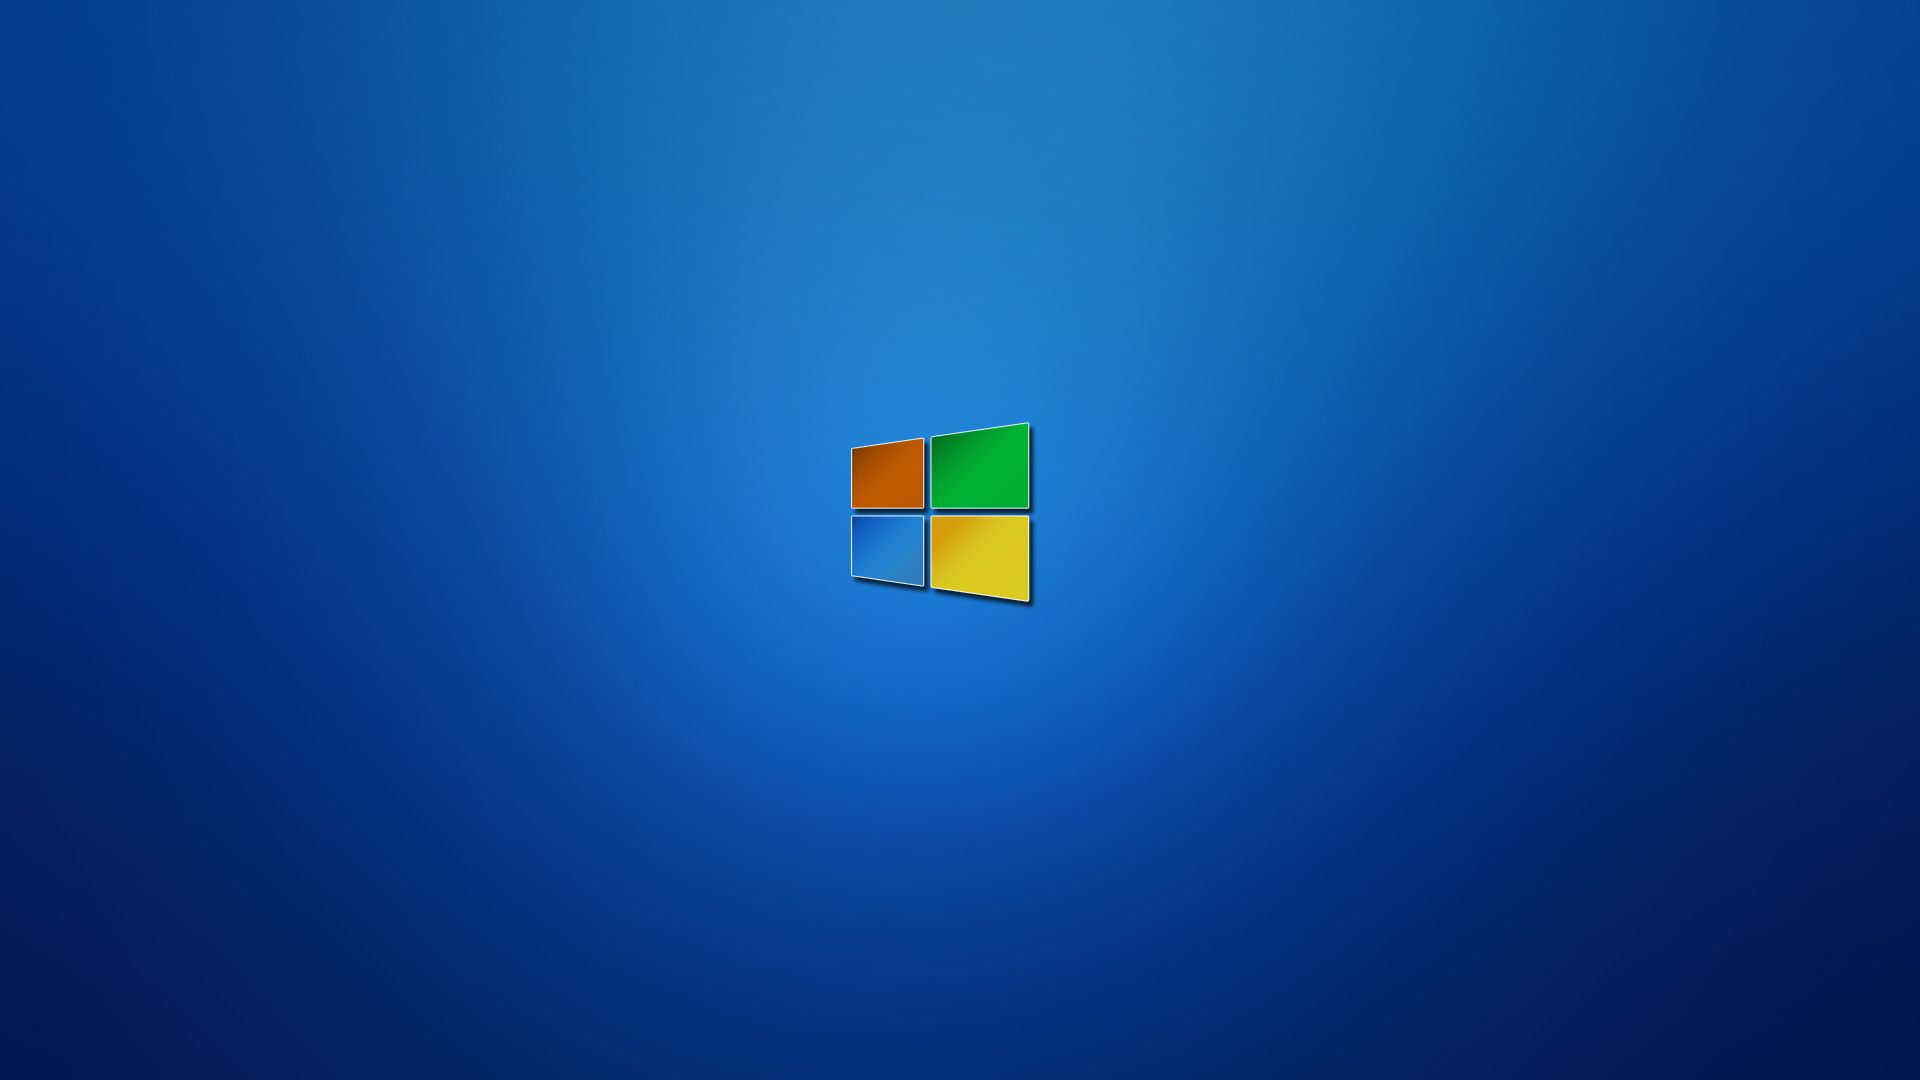 Windows 8 Wallpaper Pack by Brebenel Silviu on DeviantArt